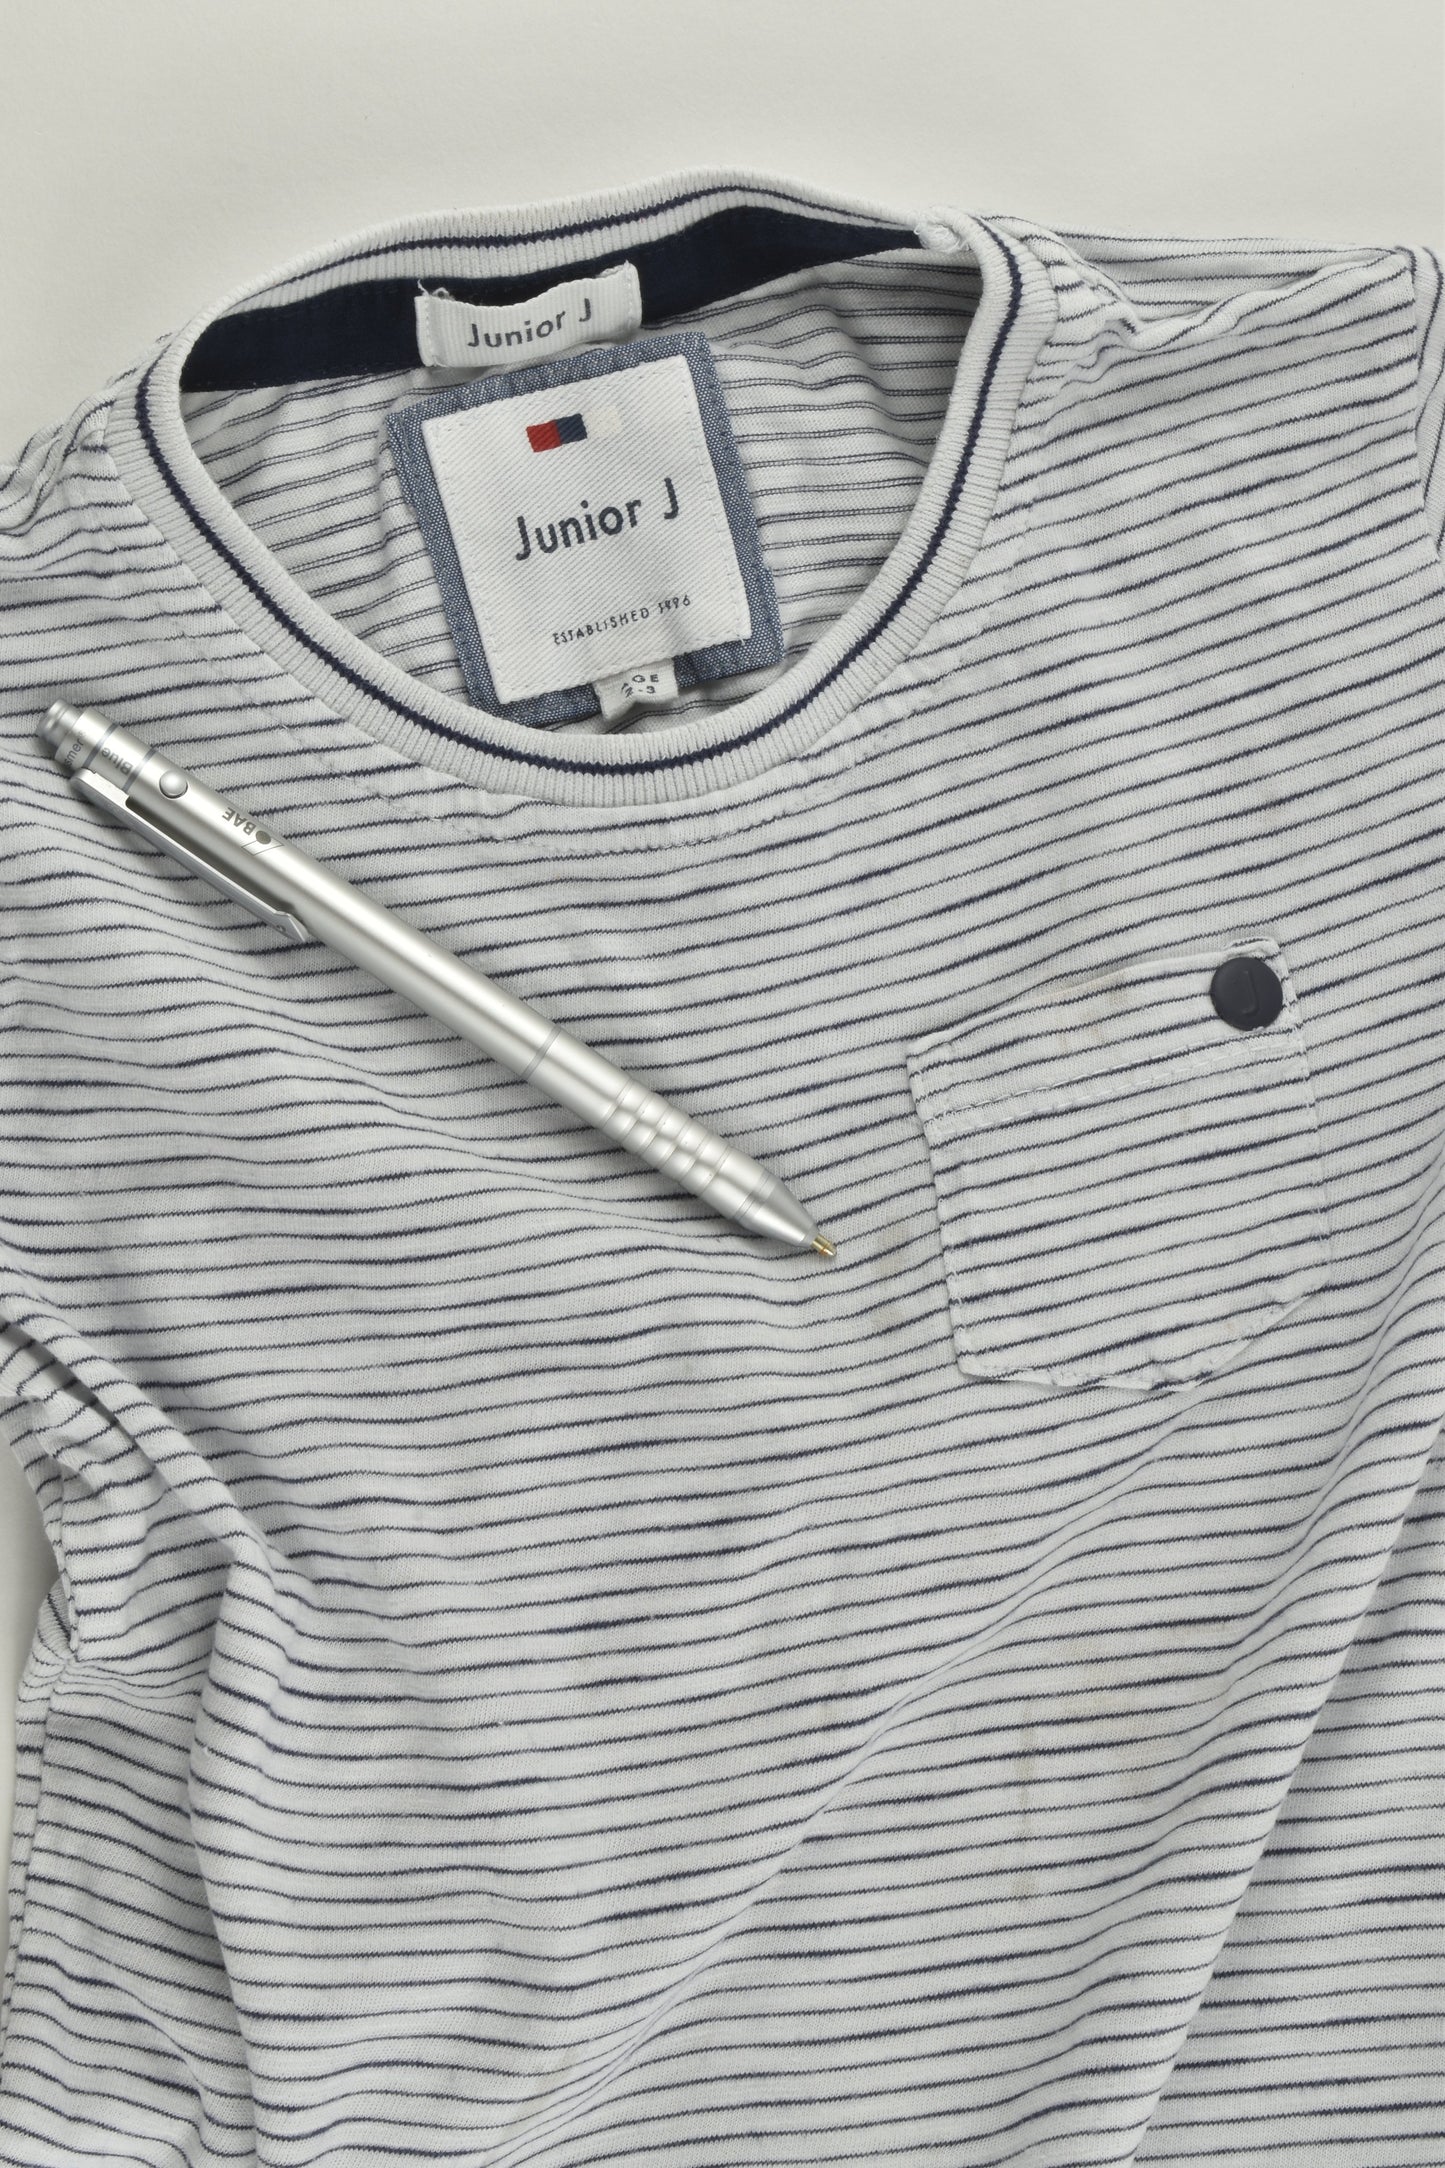 Jasper Conran (Debenhams) Size 2-3 (98 cm) Striped T-shirt